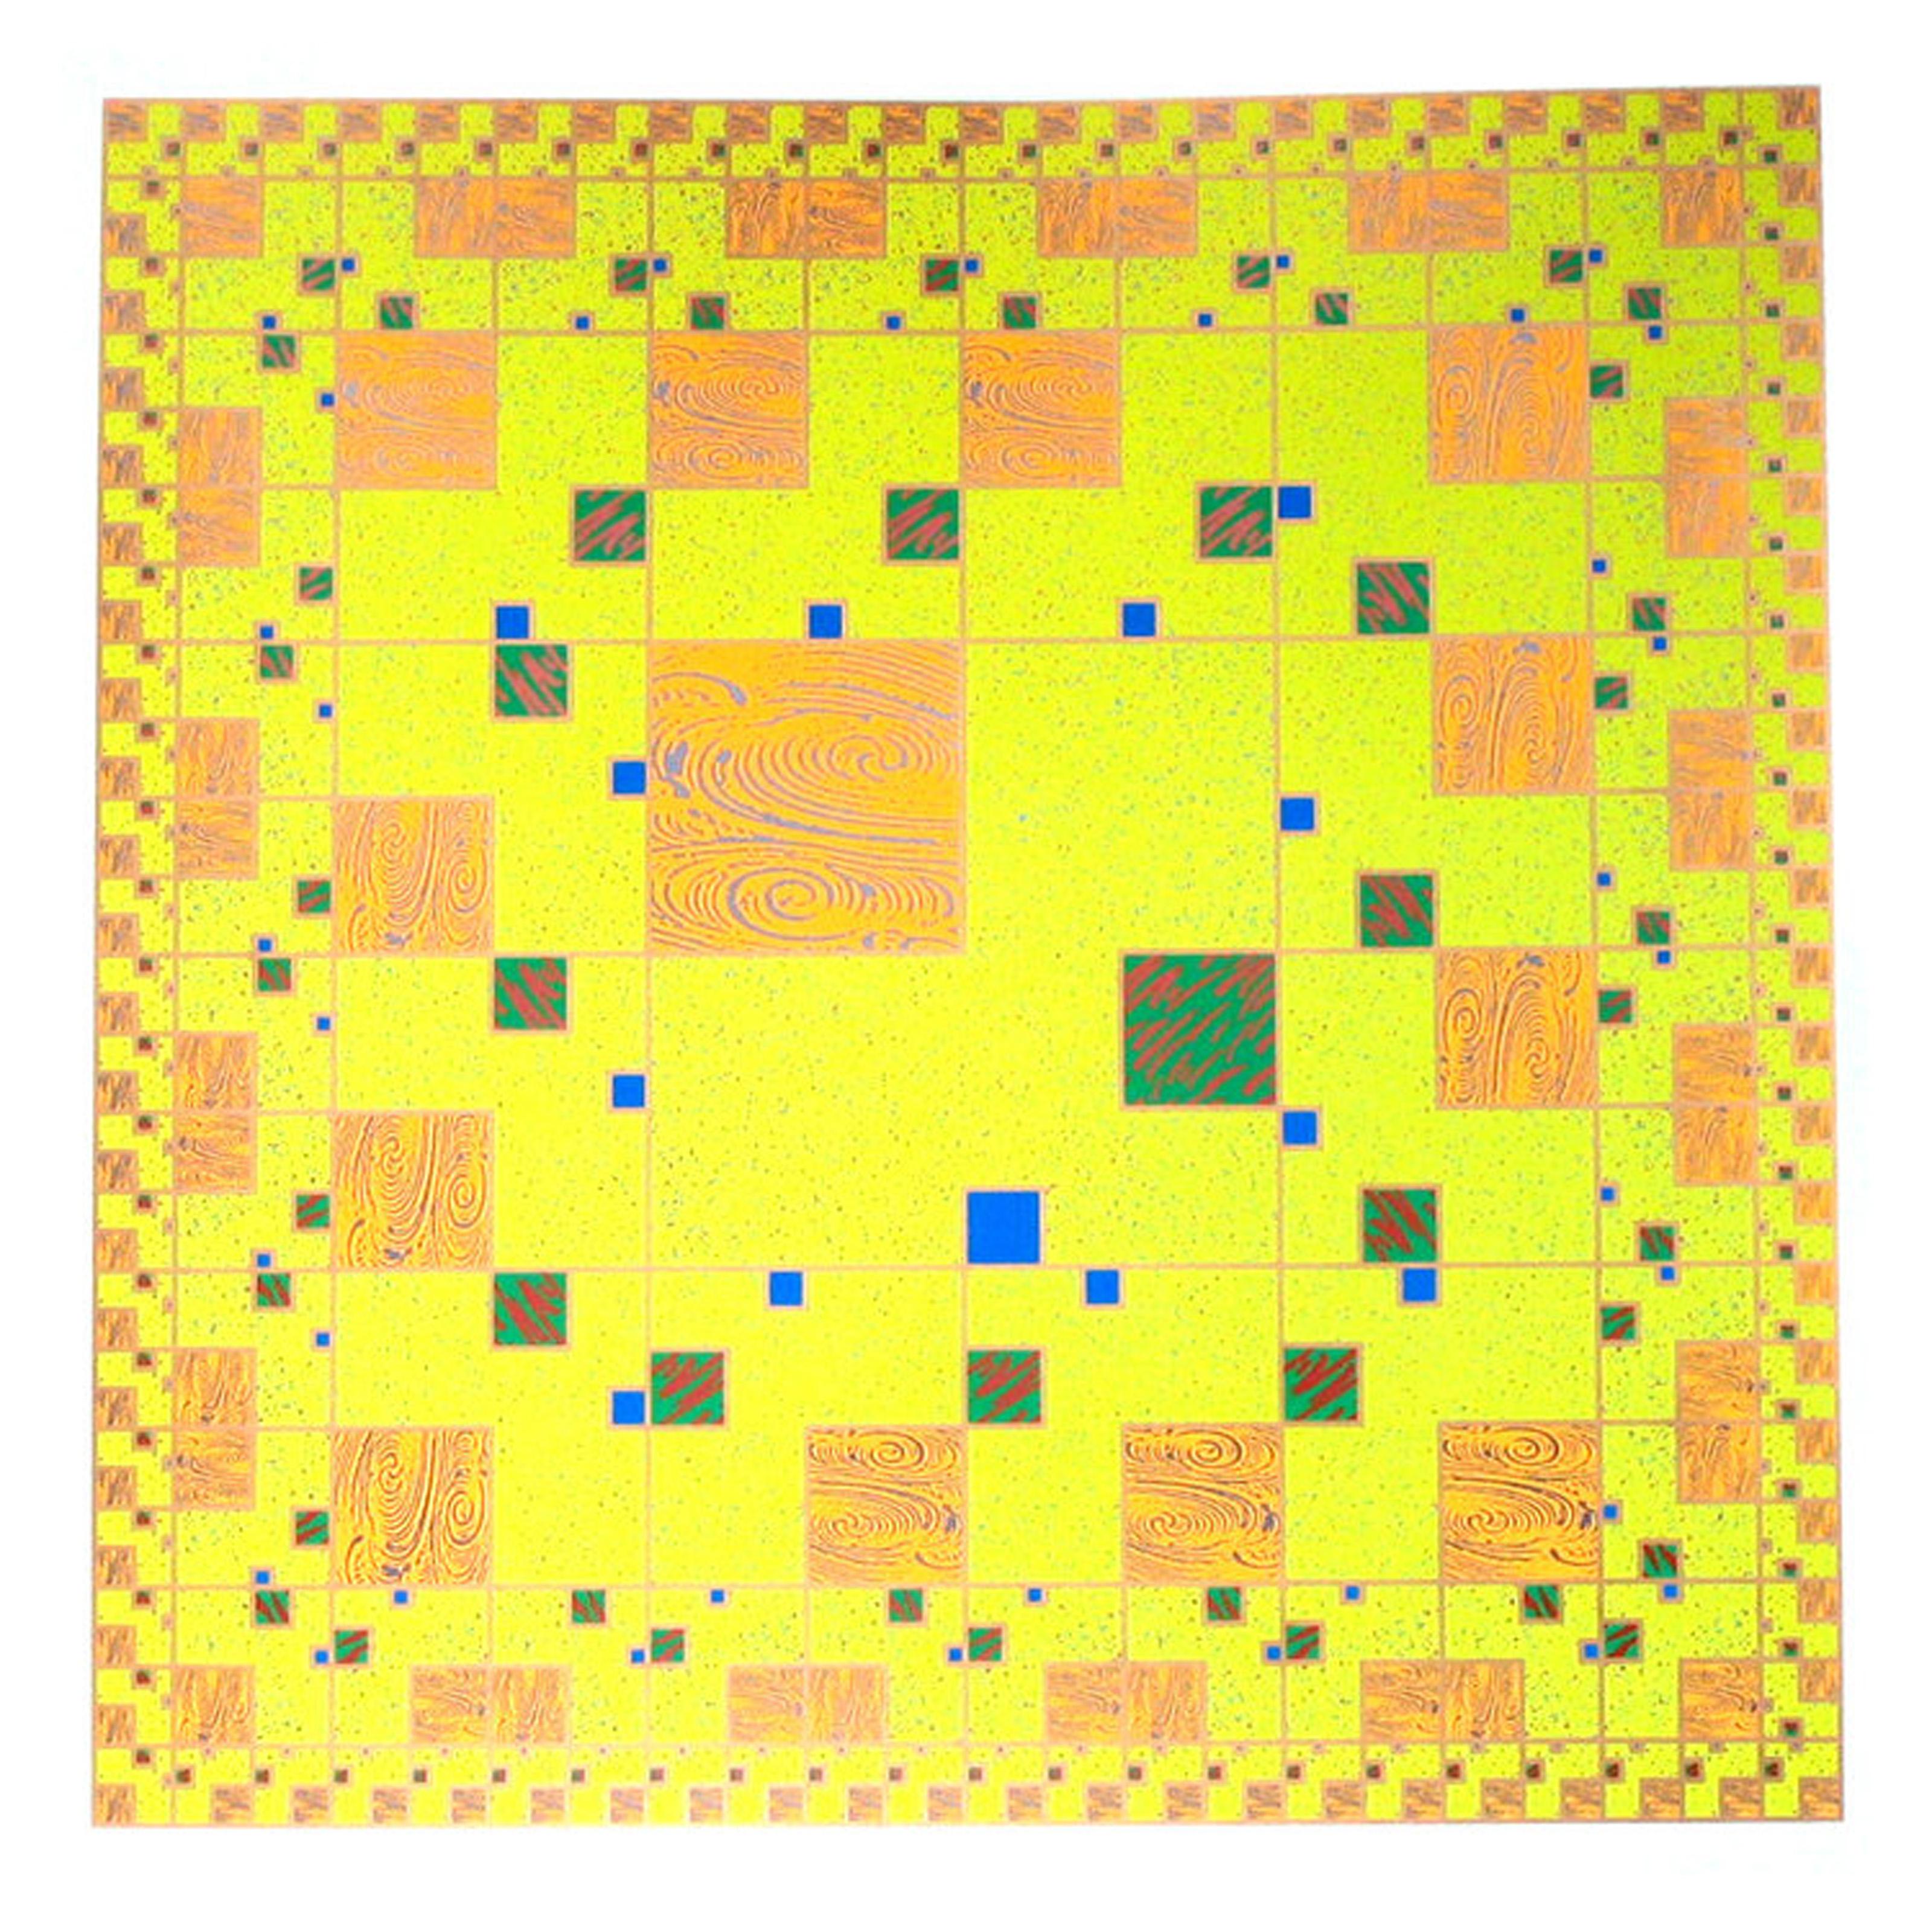 A bright yellow geometric abstract print by Japanese artist Takaaki Matsumoto. 

Yellow
Takaaki Matsumoto, Japanese (1954)
Date: 1991
Screenprint
Edition of 89
Size: 24 x 24 in. (60.96 x 60.96 cm)